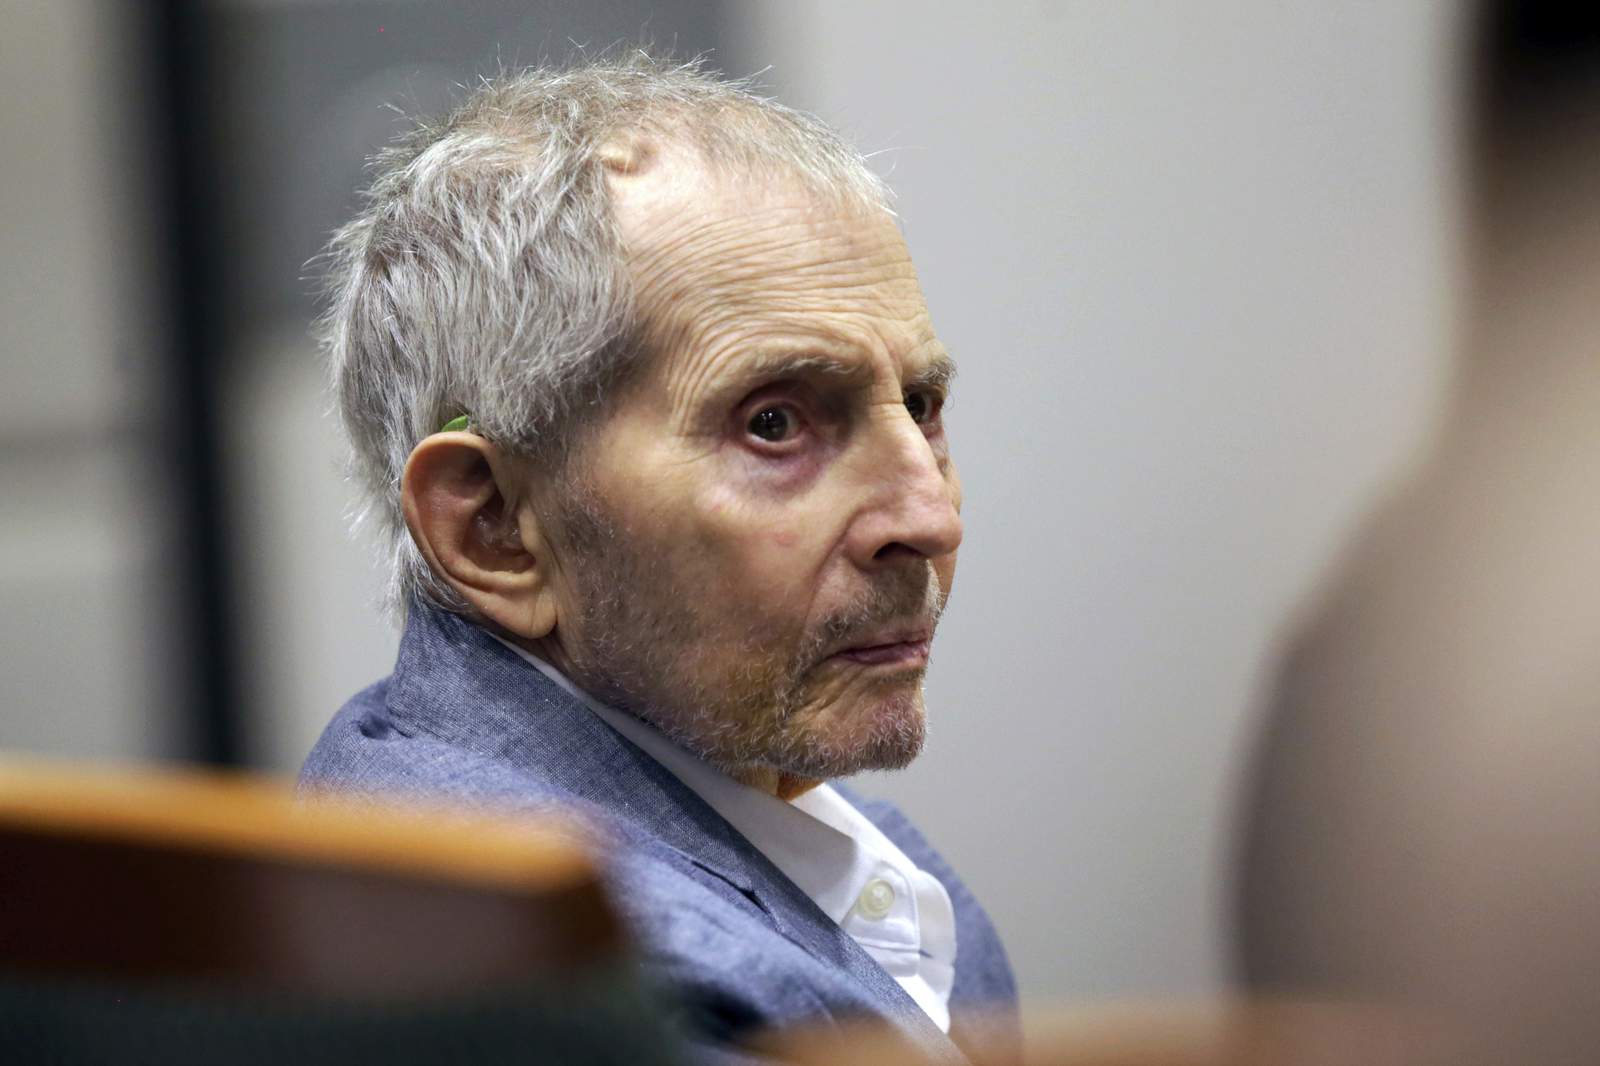 Robert Durst murder trial resumes May 17 after virus delay